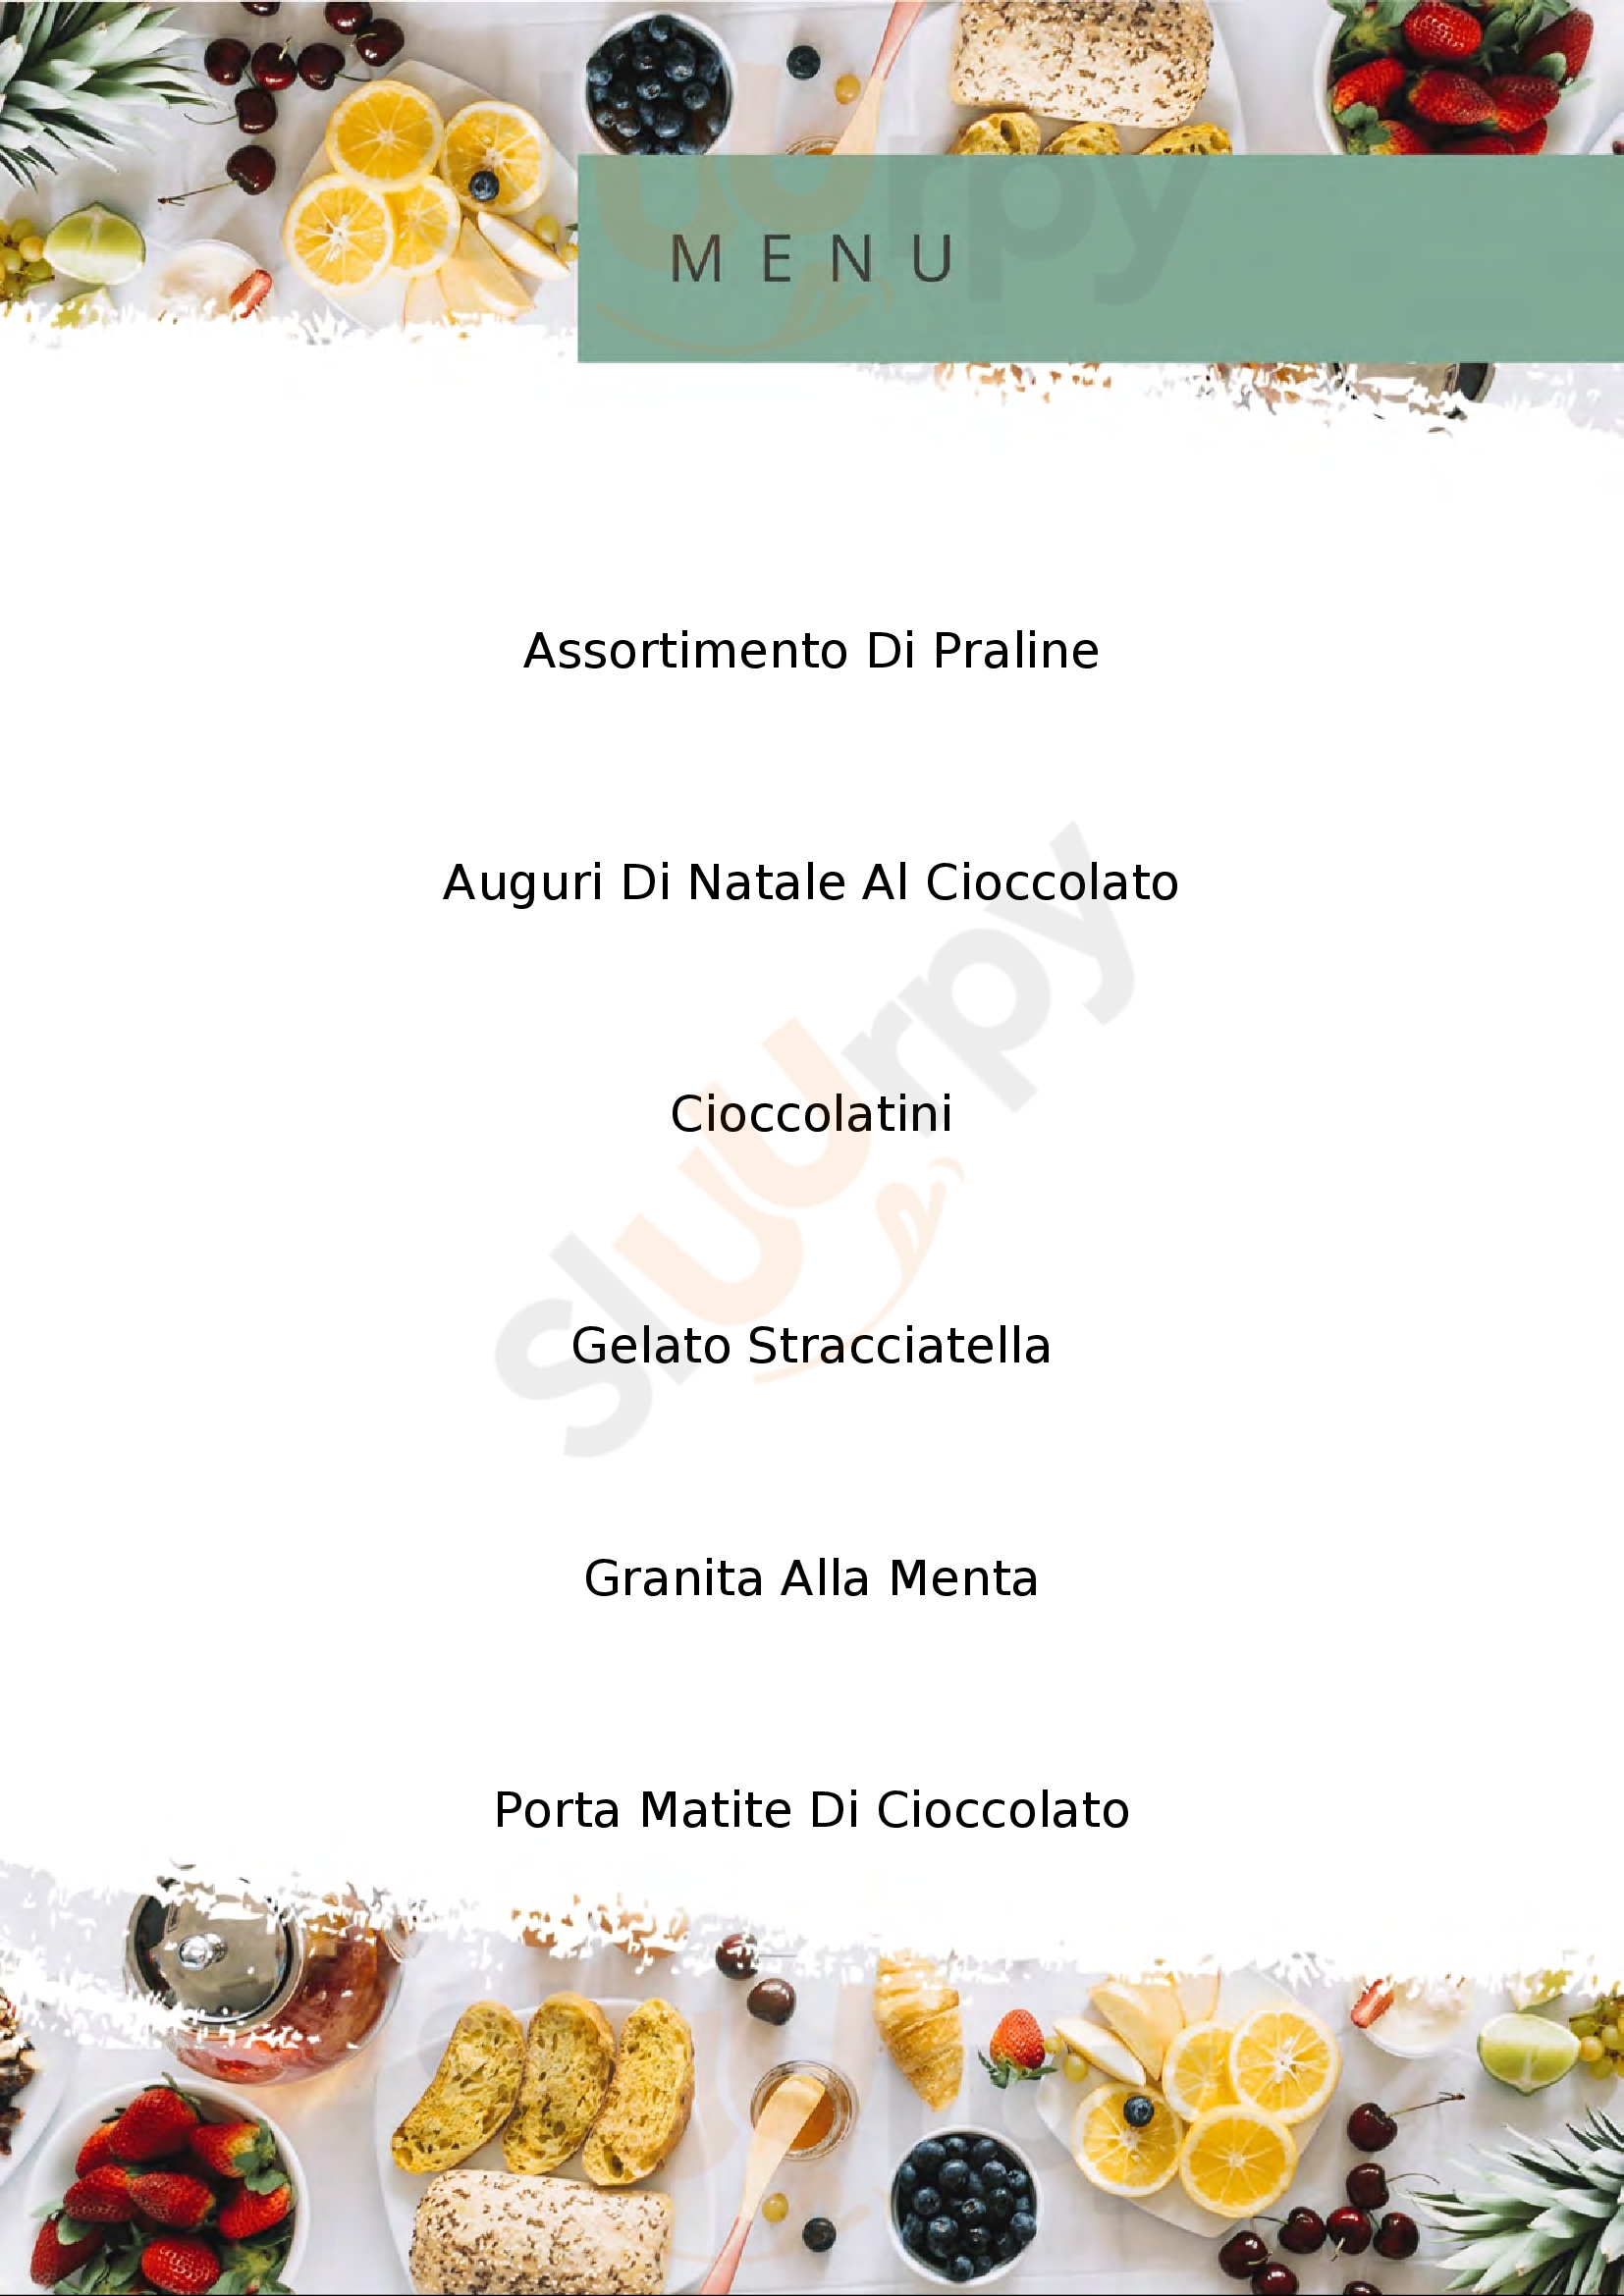 Isalberti Cioccolato Gelateria Cerea menù 1 pagina